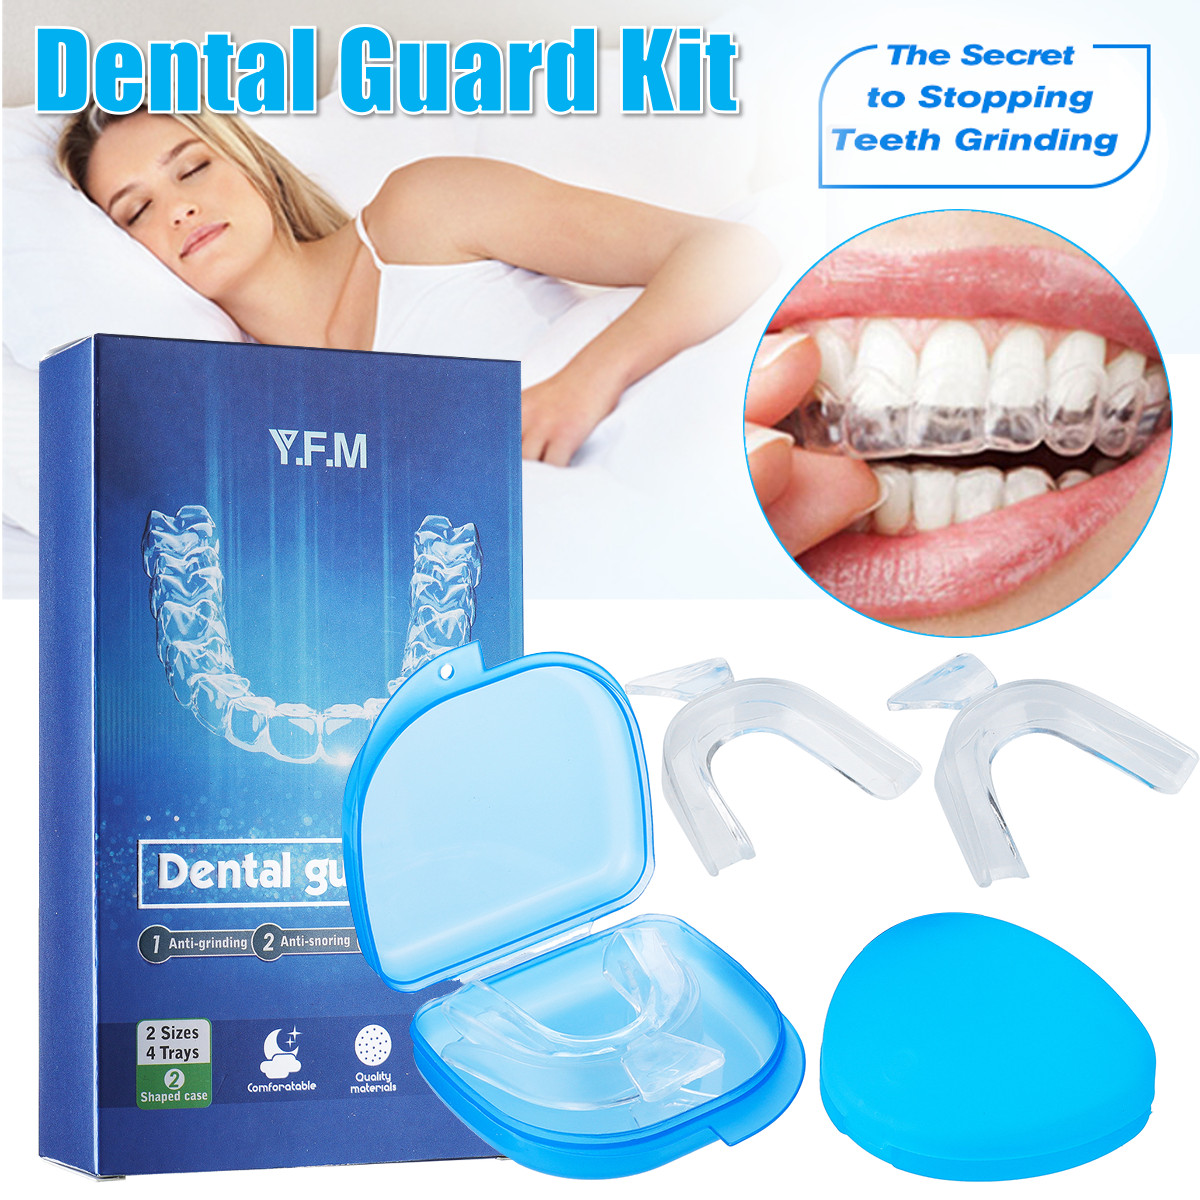 Professional-Dental-Guard-Thermoplastic-Teeth-Grinding-Night-Protector-Stop-Teeth-Grinding-Eliminate-1341293-1